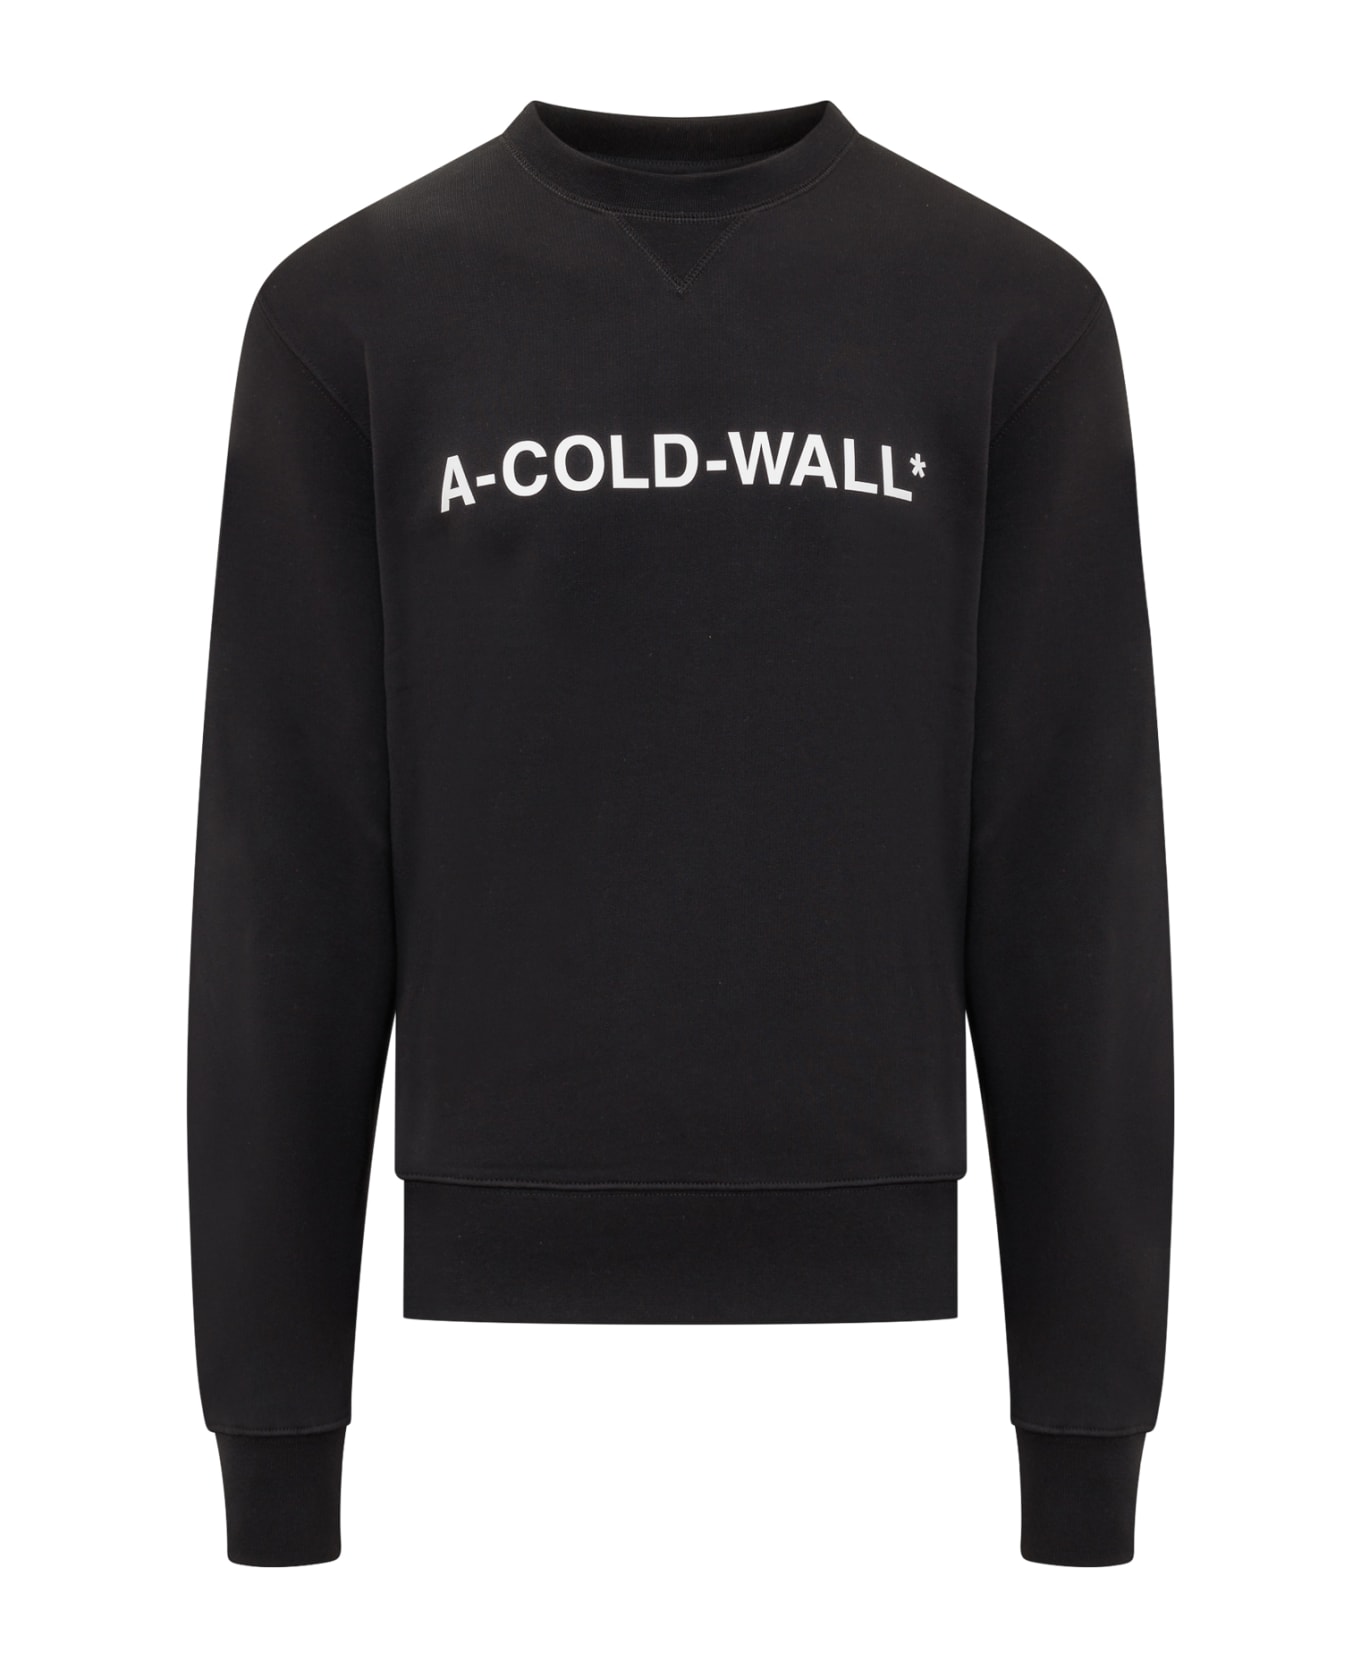 A-COLD-WALL Essential Sweatshirt - BLACK